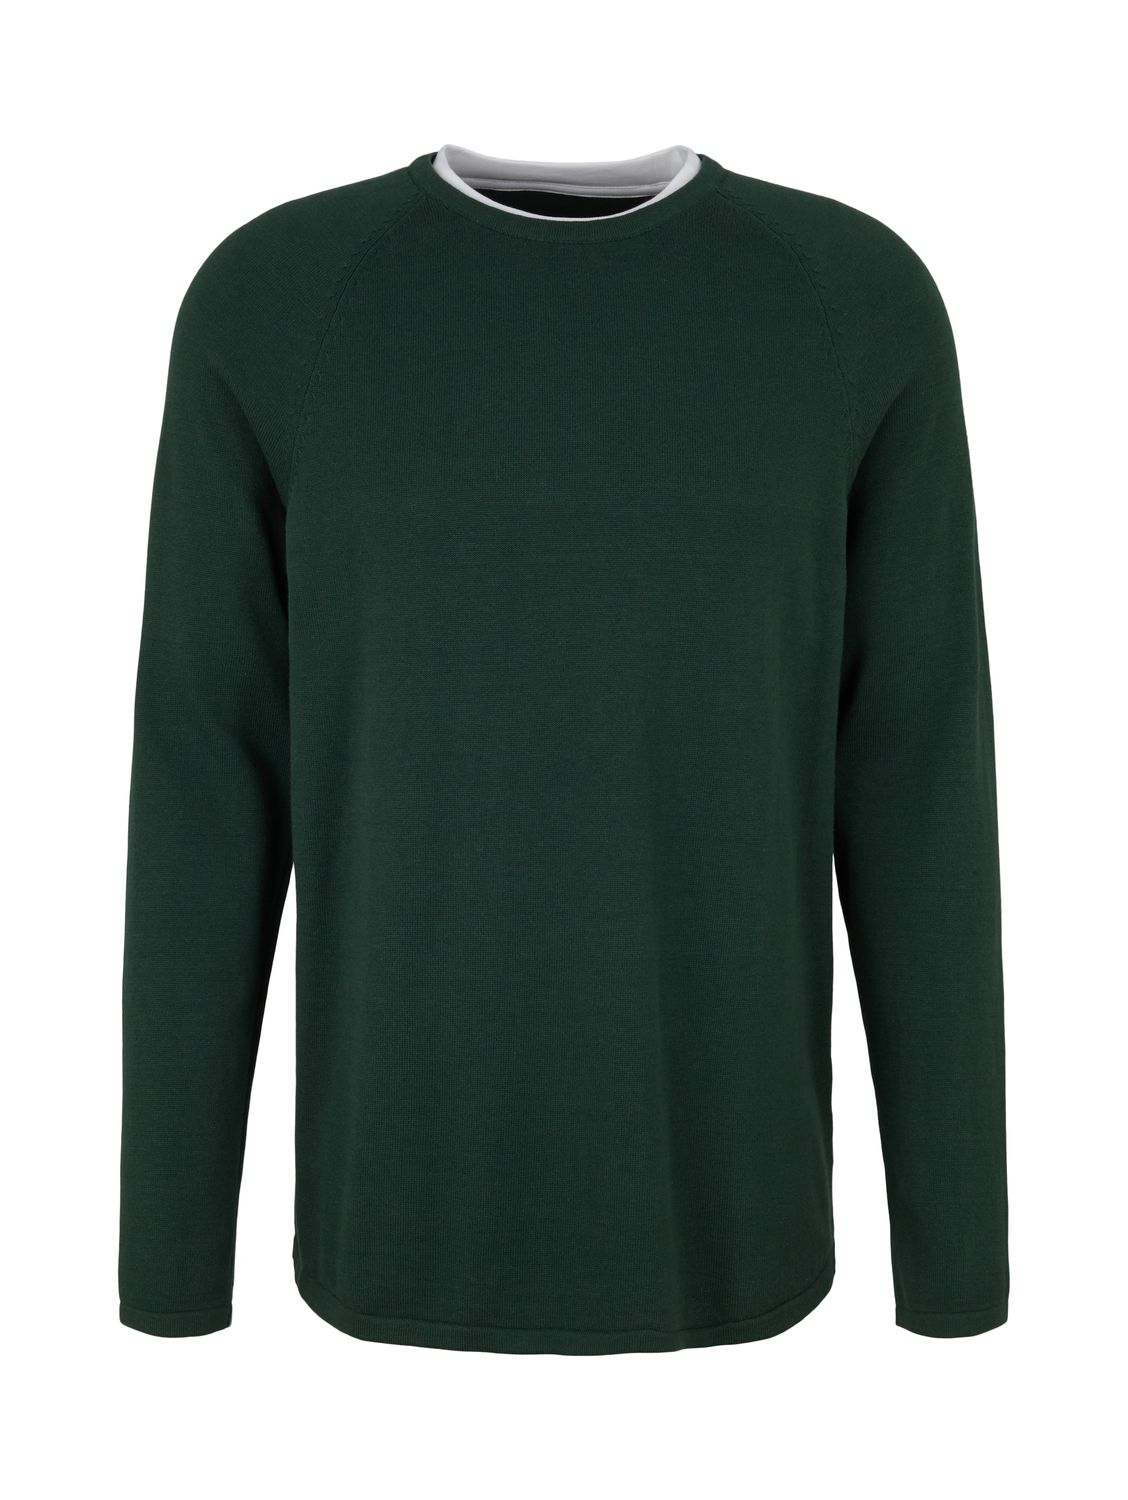 Пуловер TOM TAILOR Denim BASIC, зеленый футболка tom tailor размер s белый зеленый